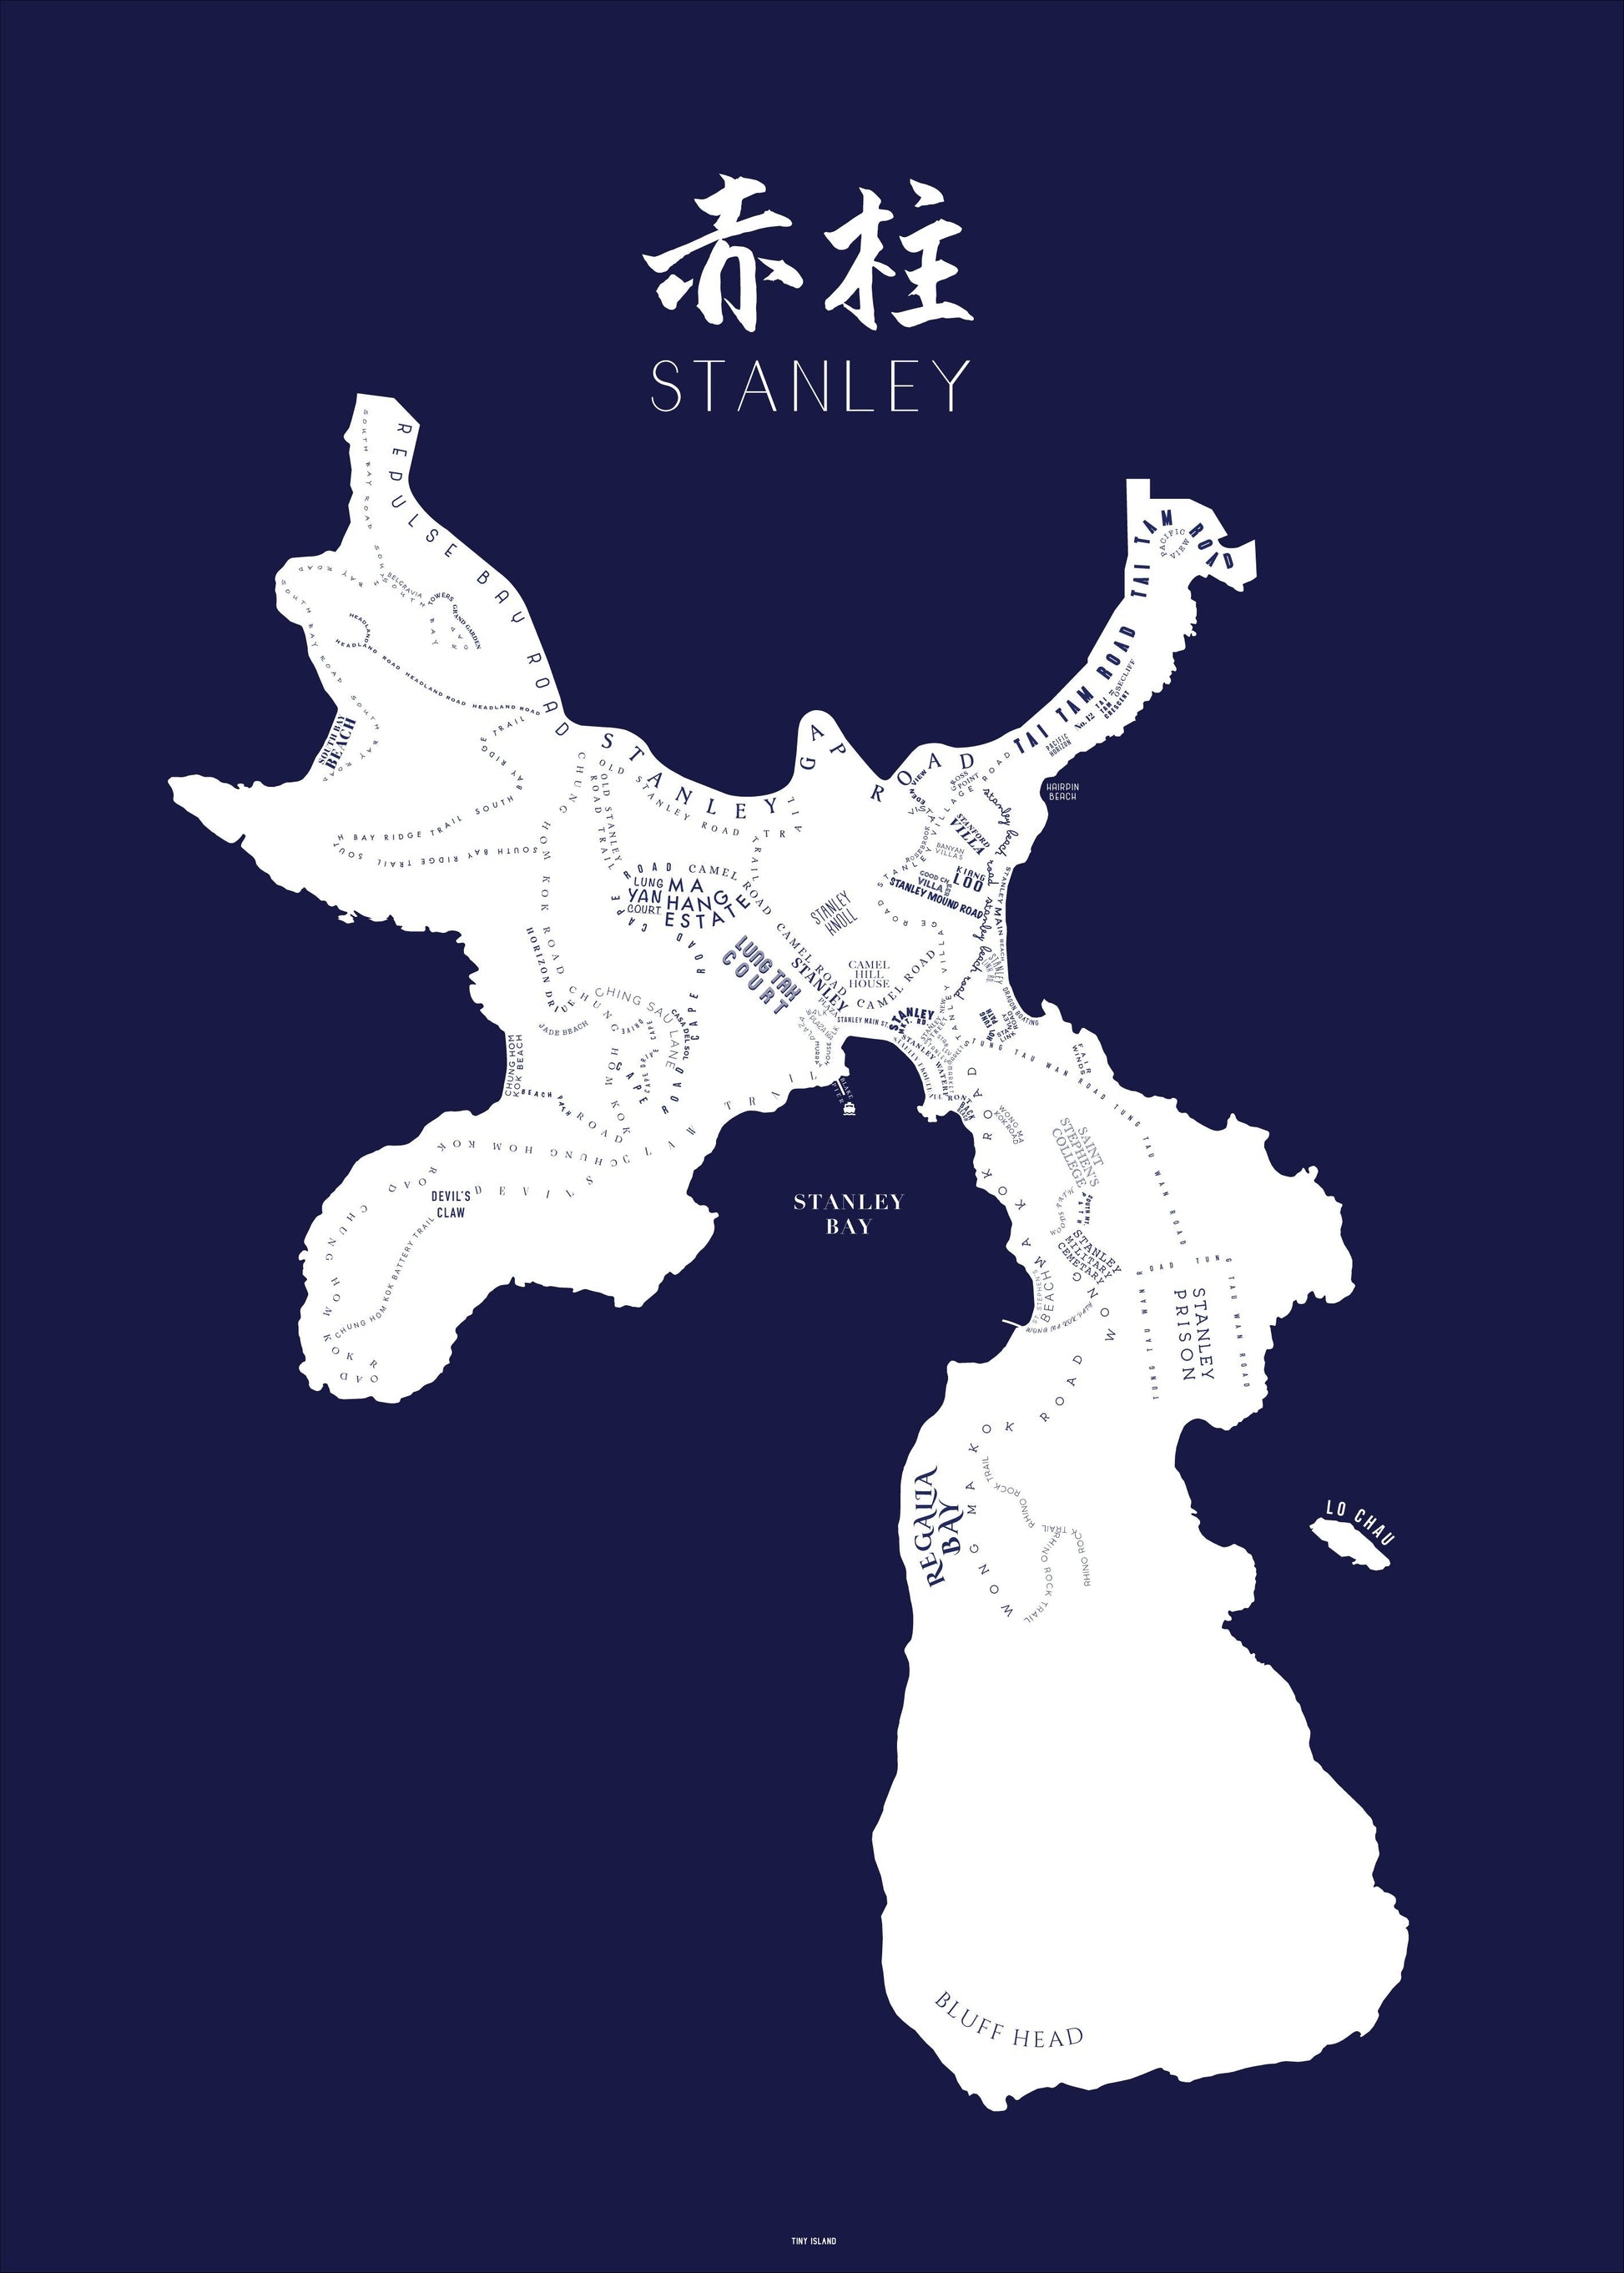 Stanley Navy - tinyislandmaps